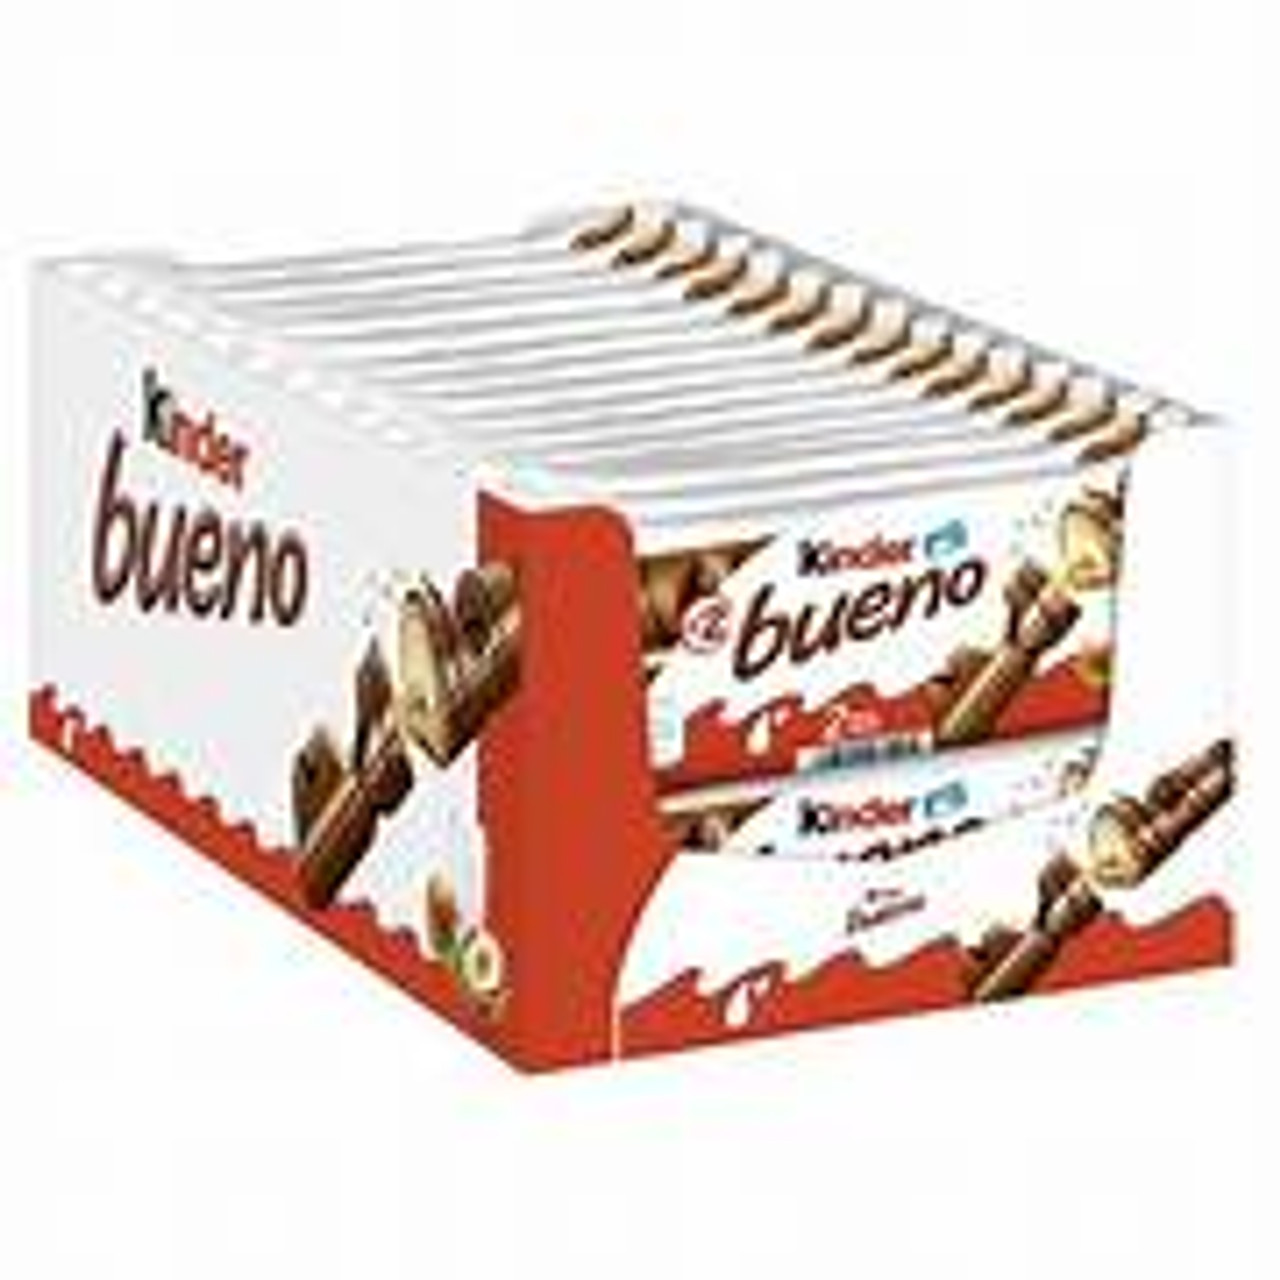 Ferrero Kinder Bueno